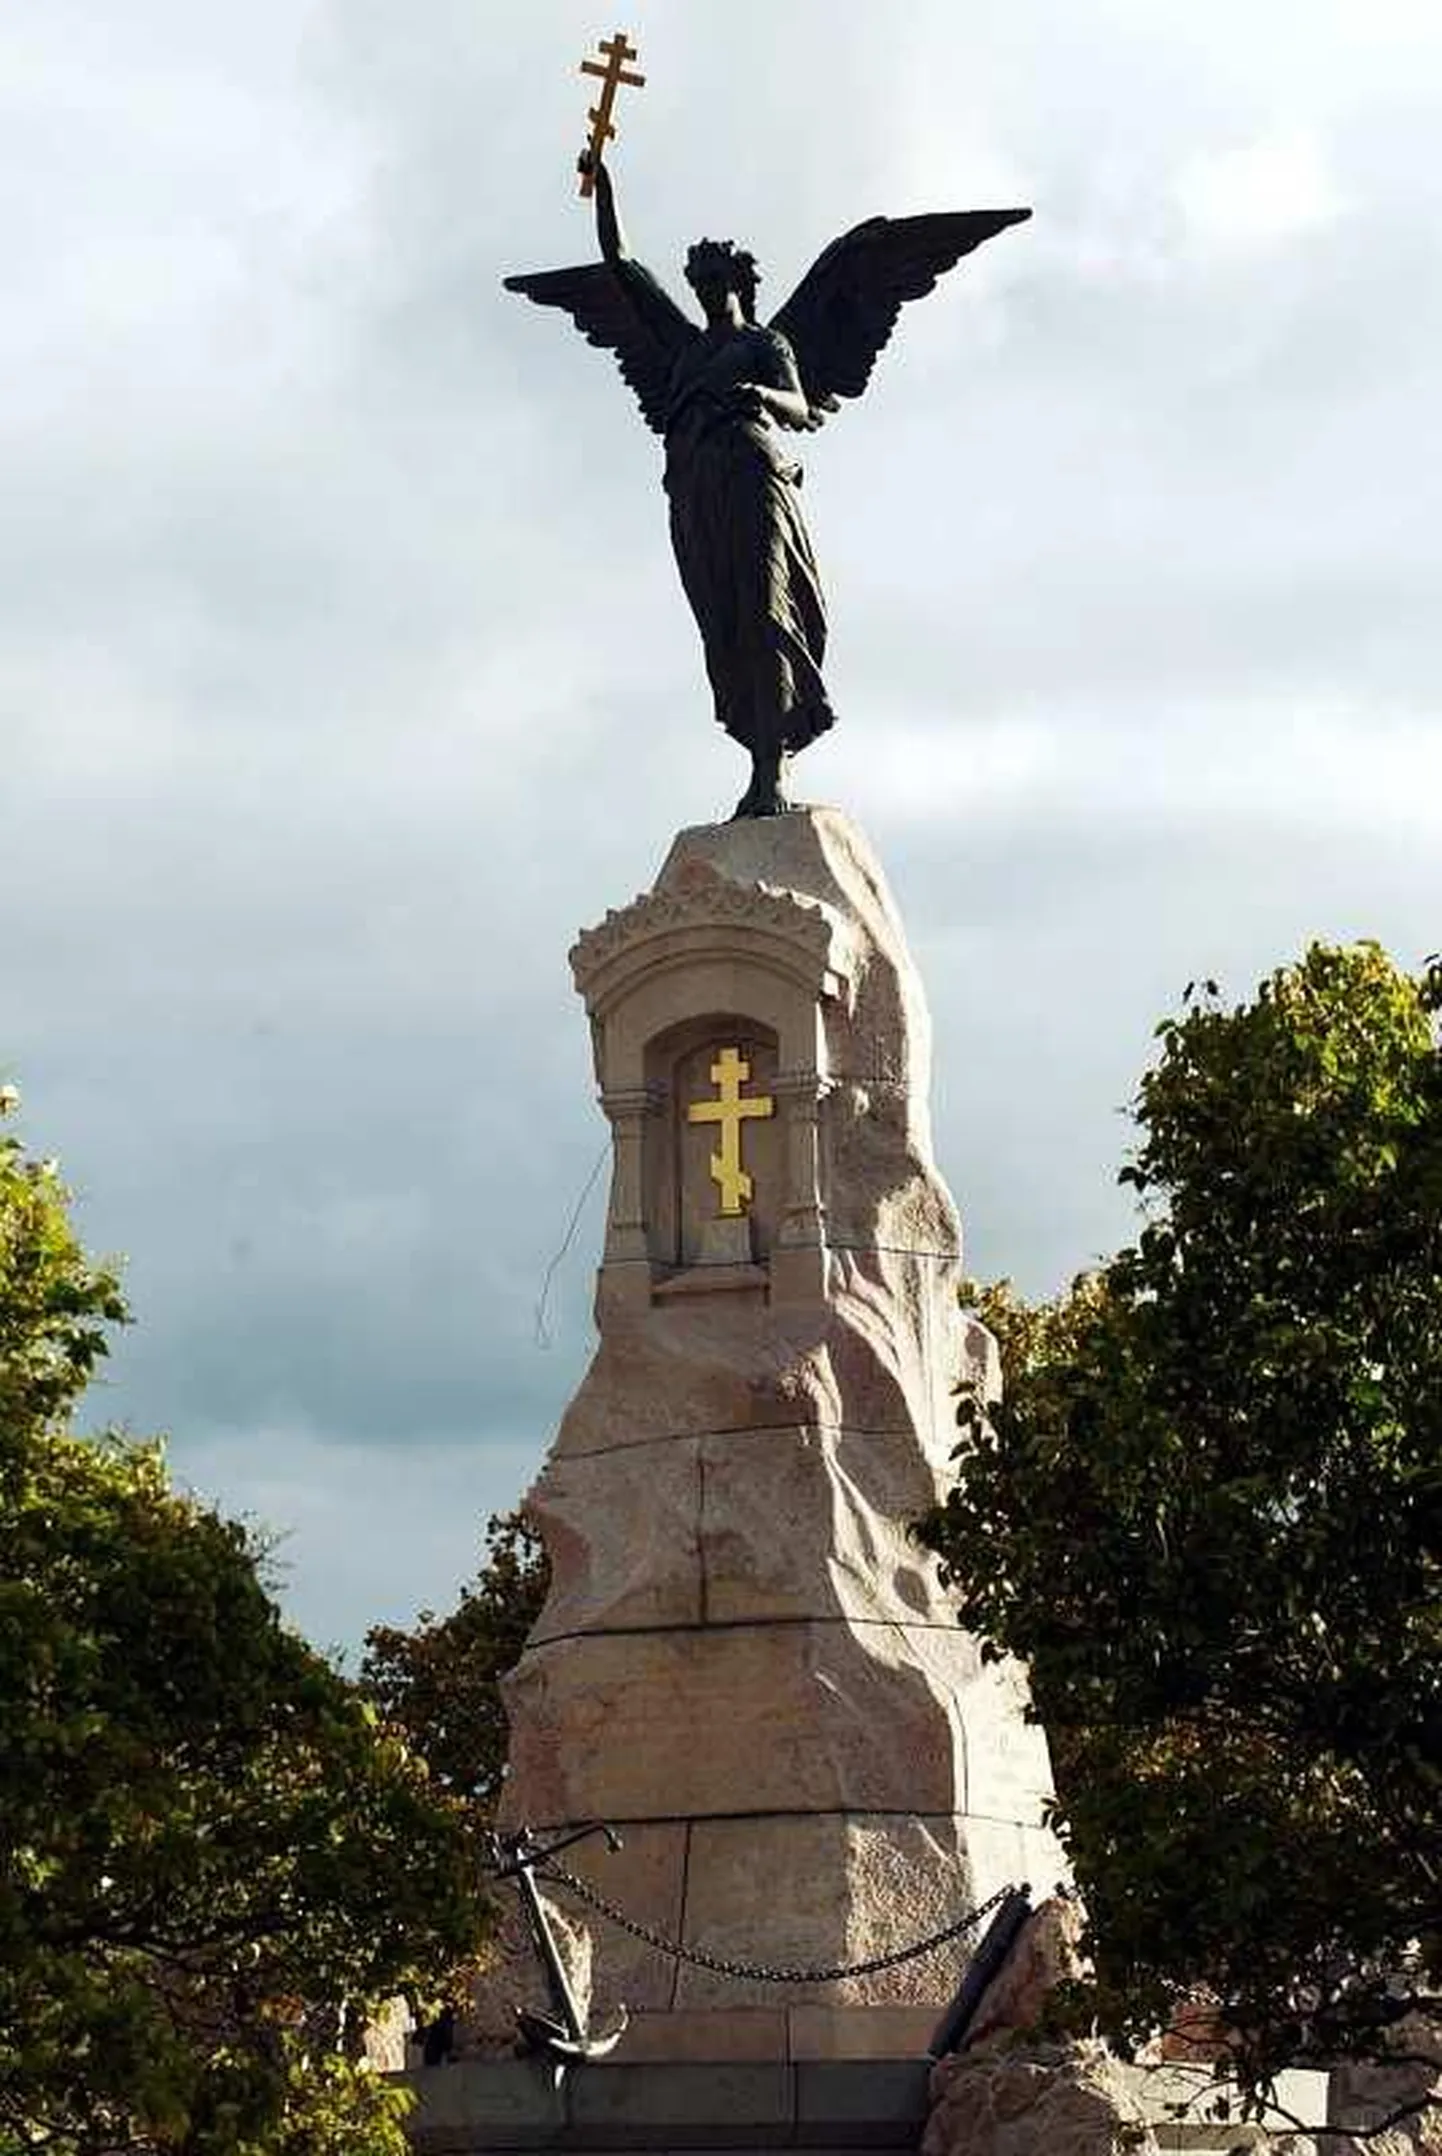 Памятник морякам броненосца "Русалка" в Кадриорге у моря.